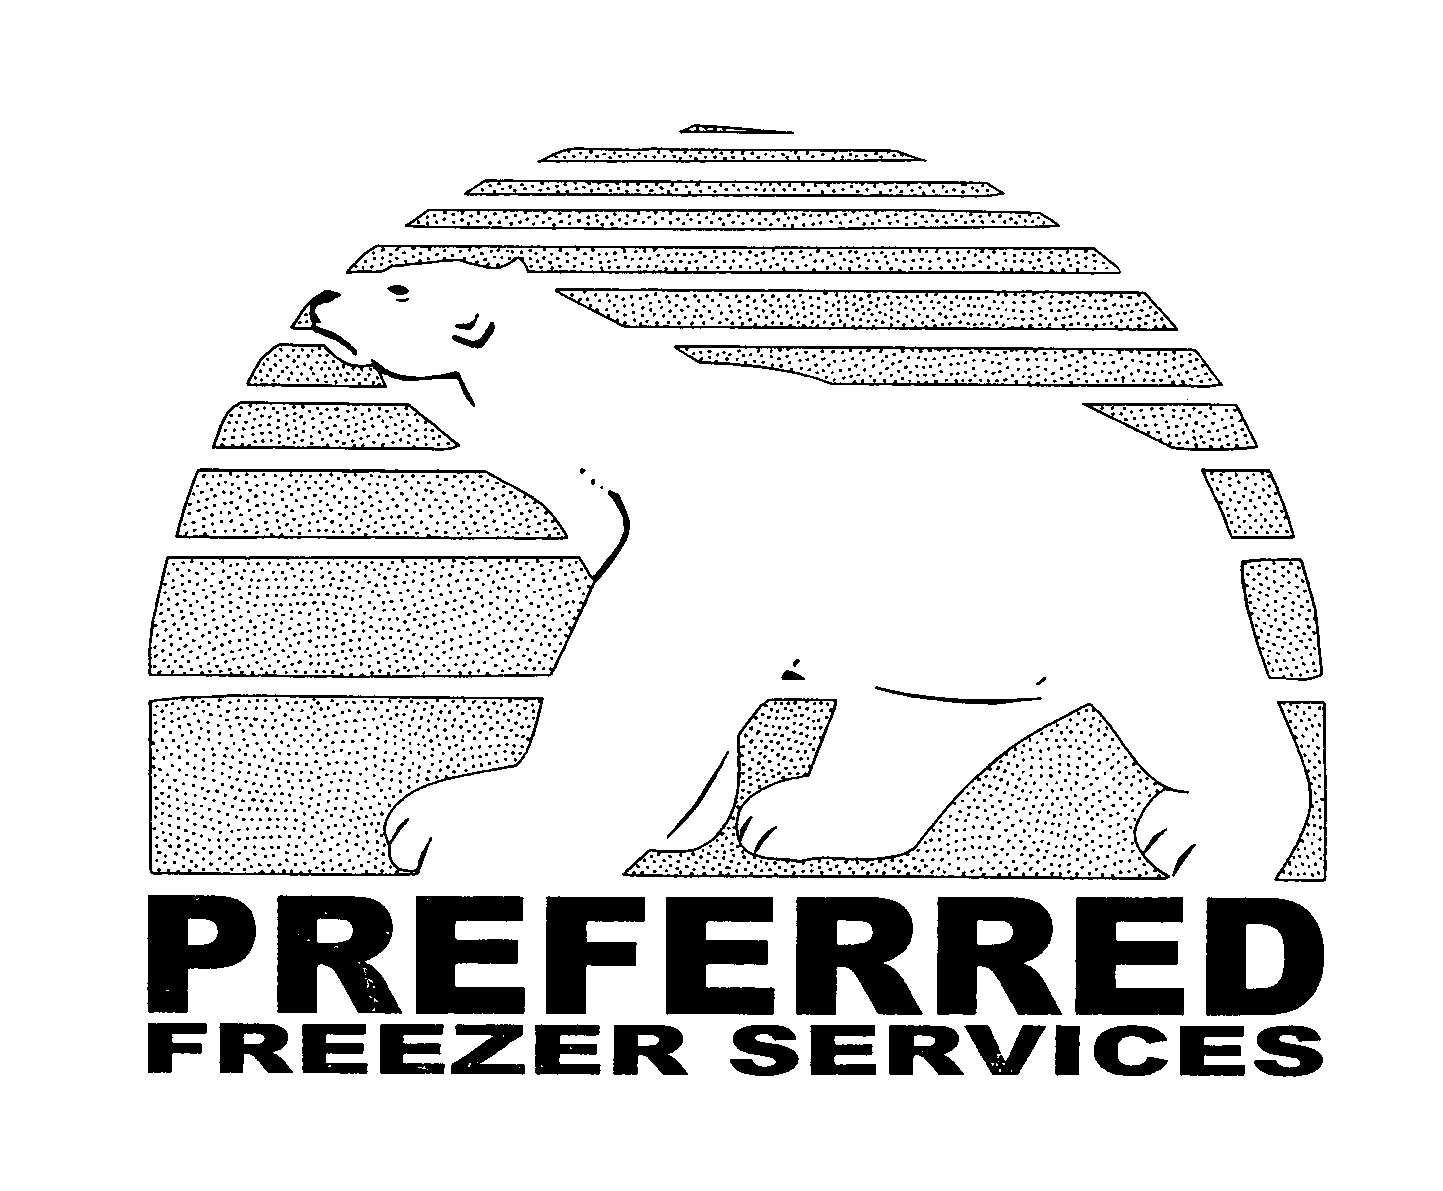  PREFERRED FREEZER SERVICES